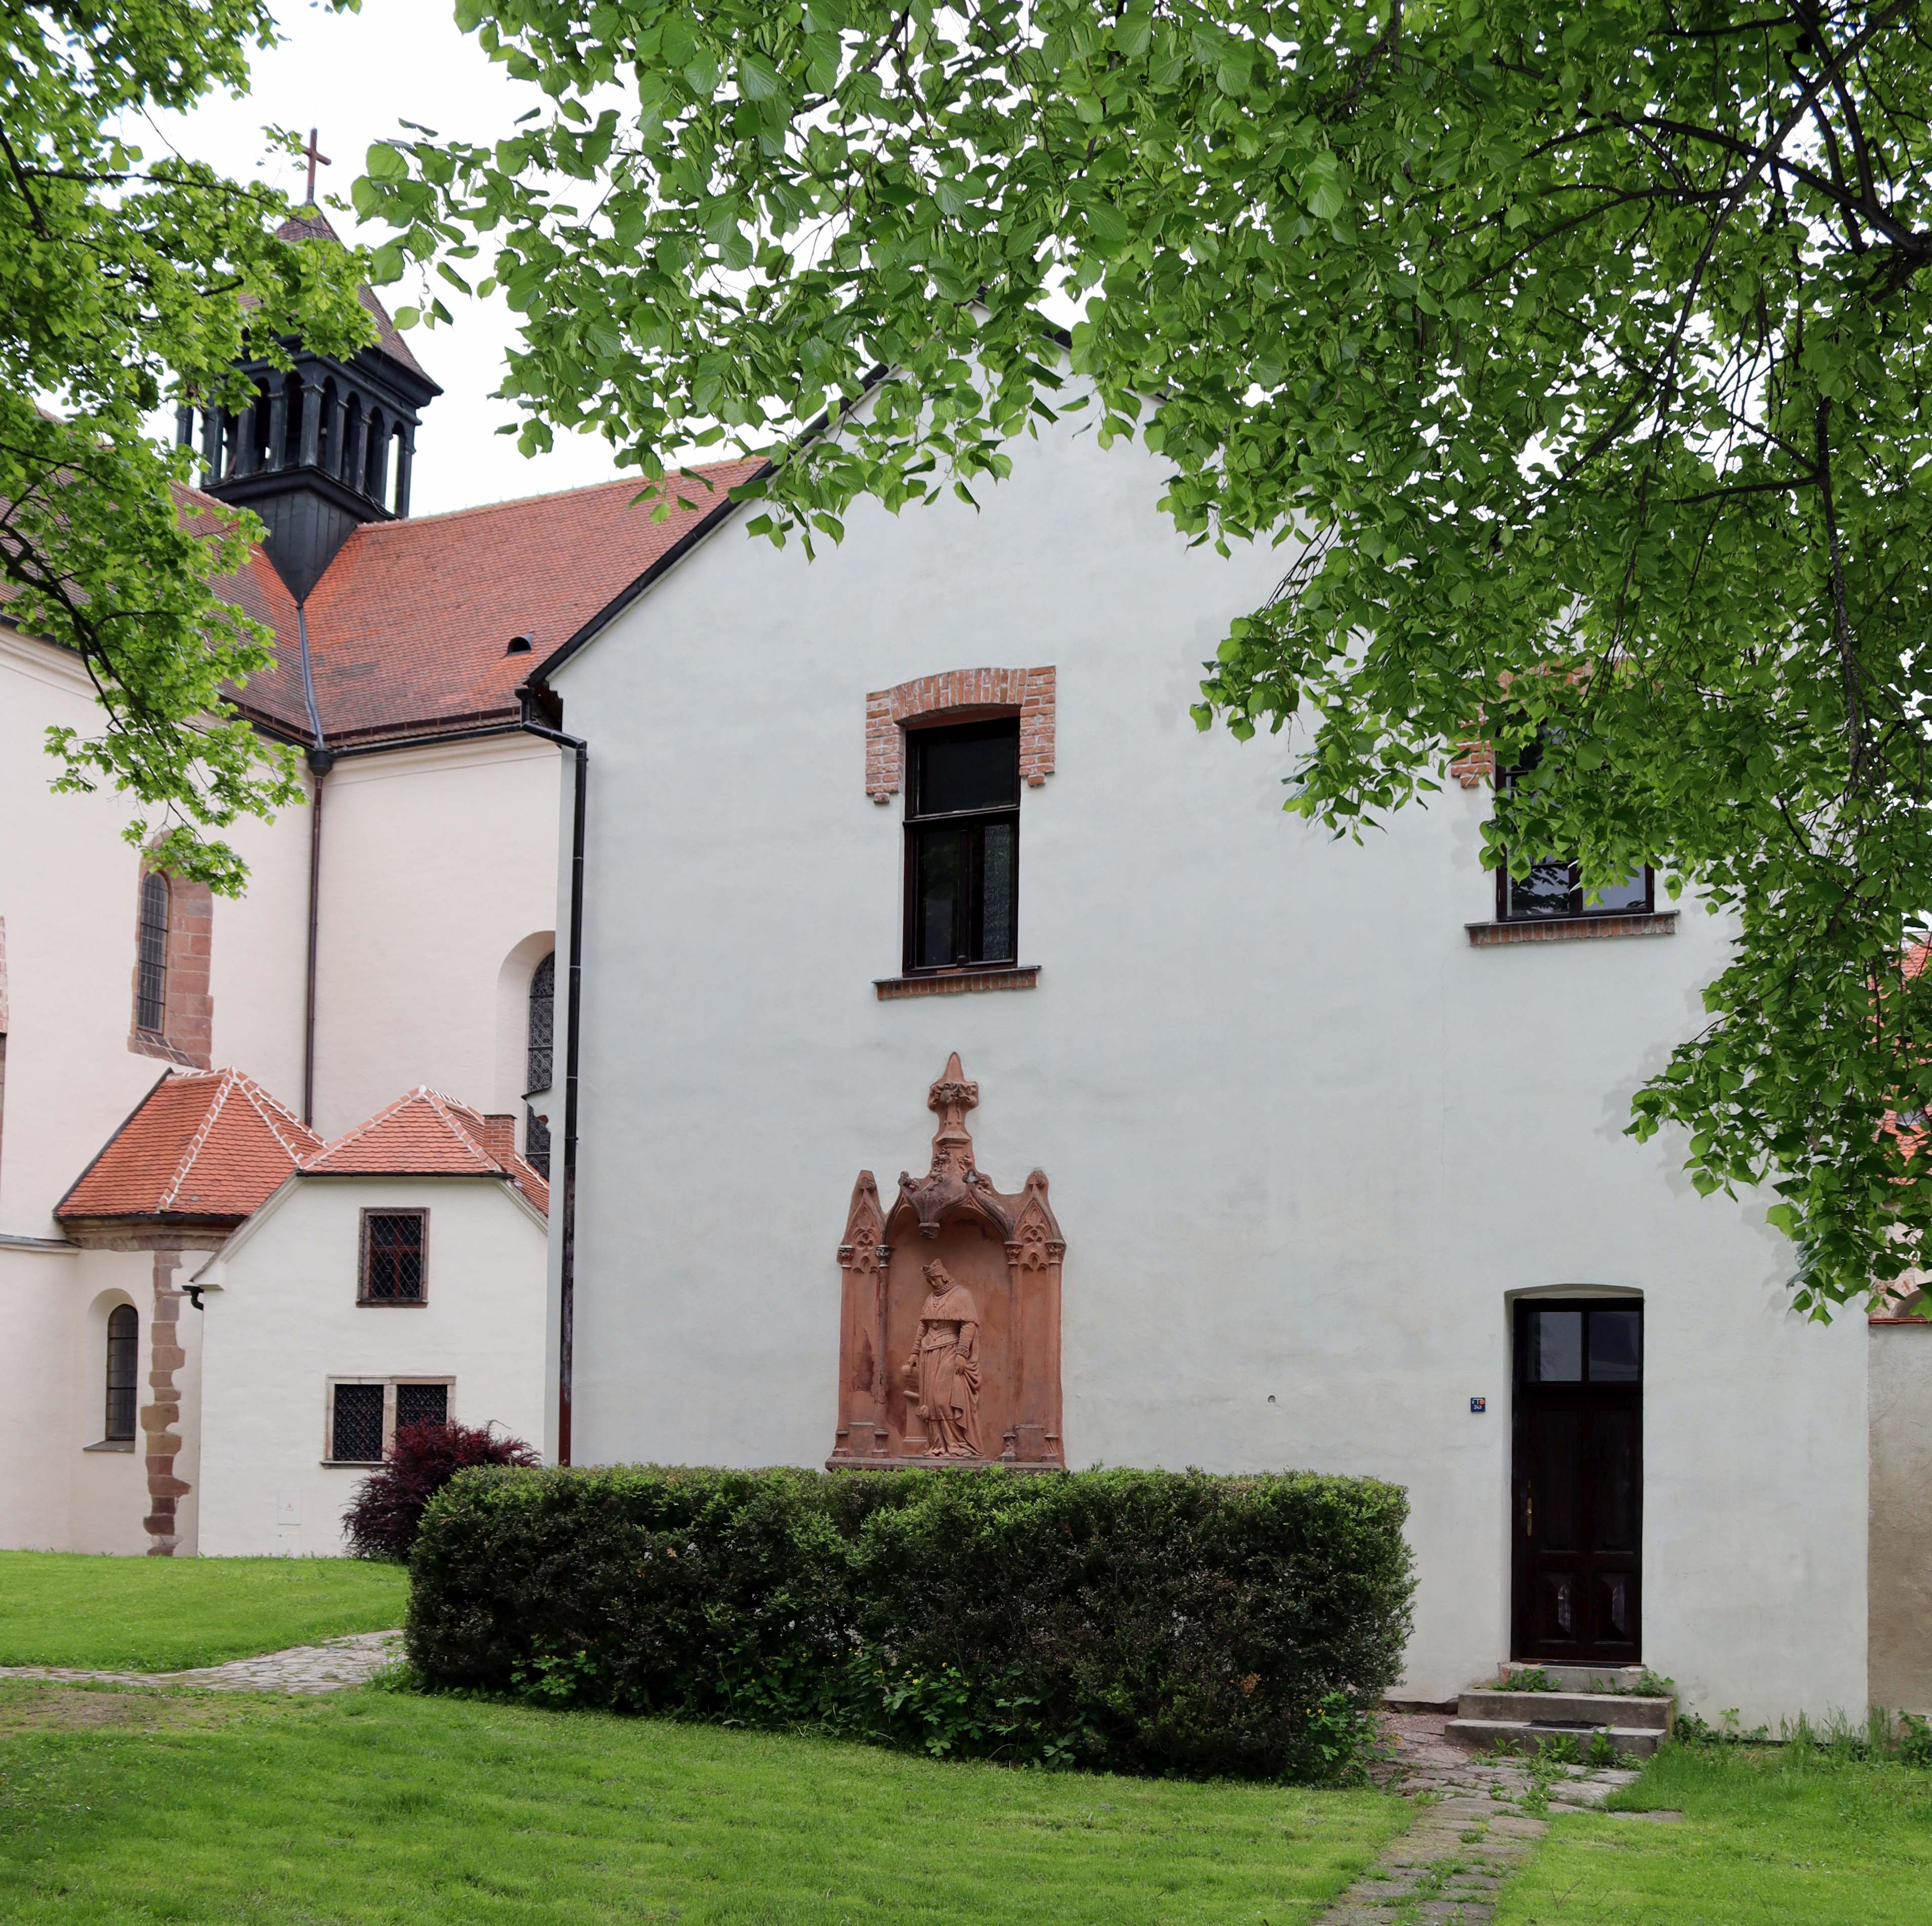 Předklášteří, Kloster Porta coeli - 